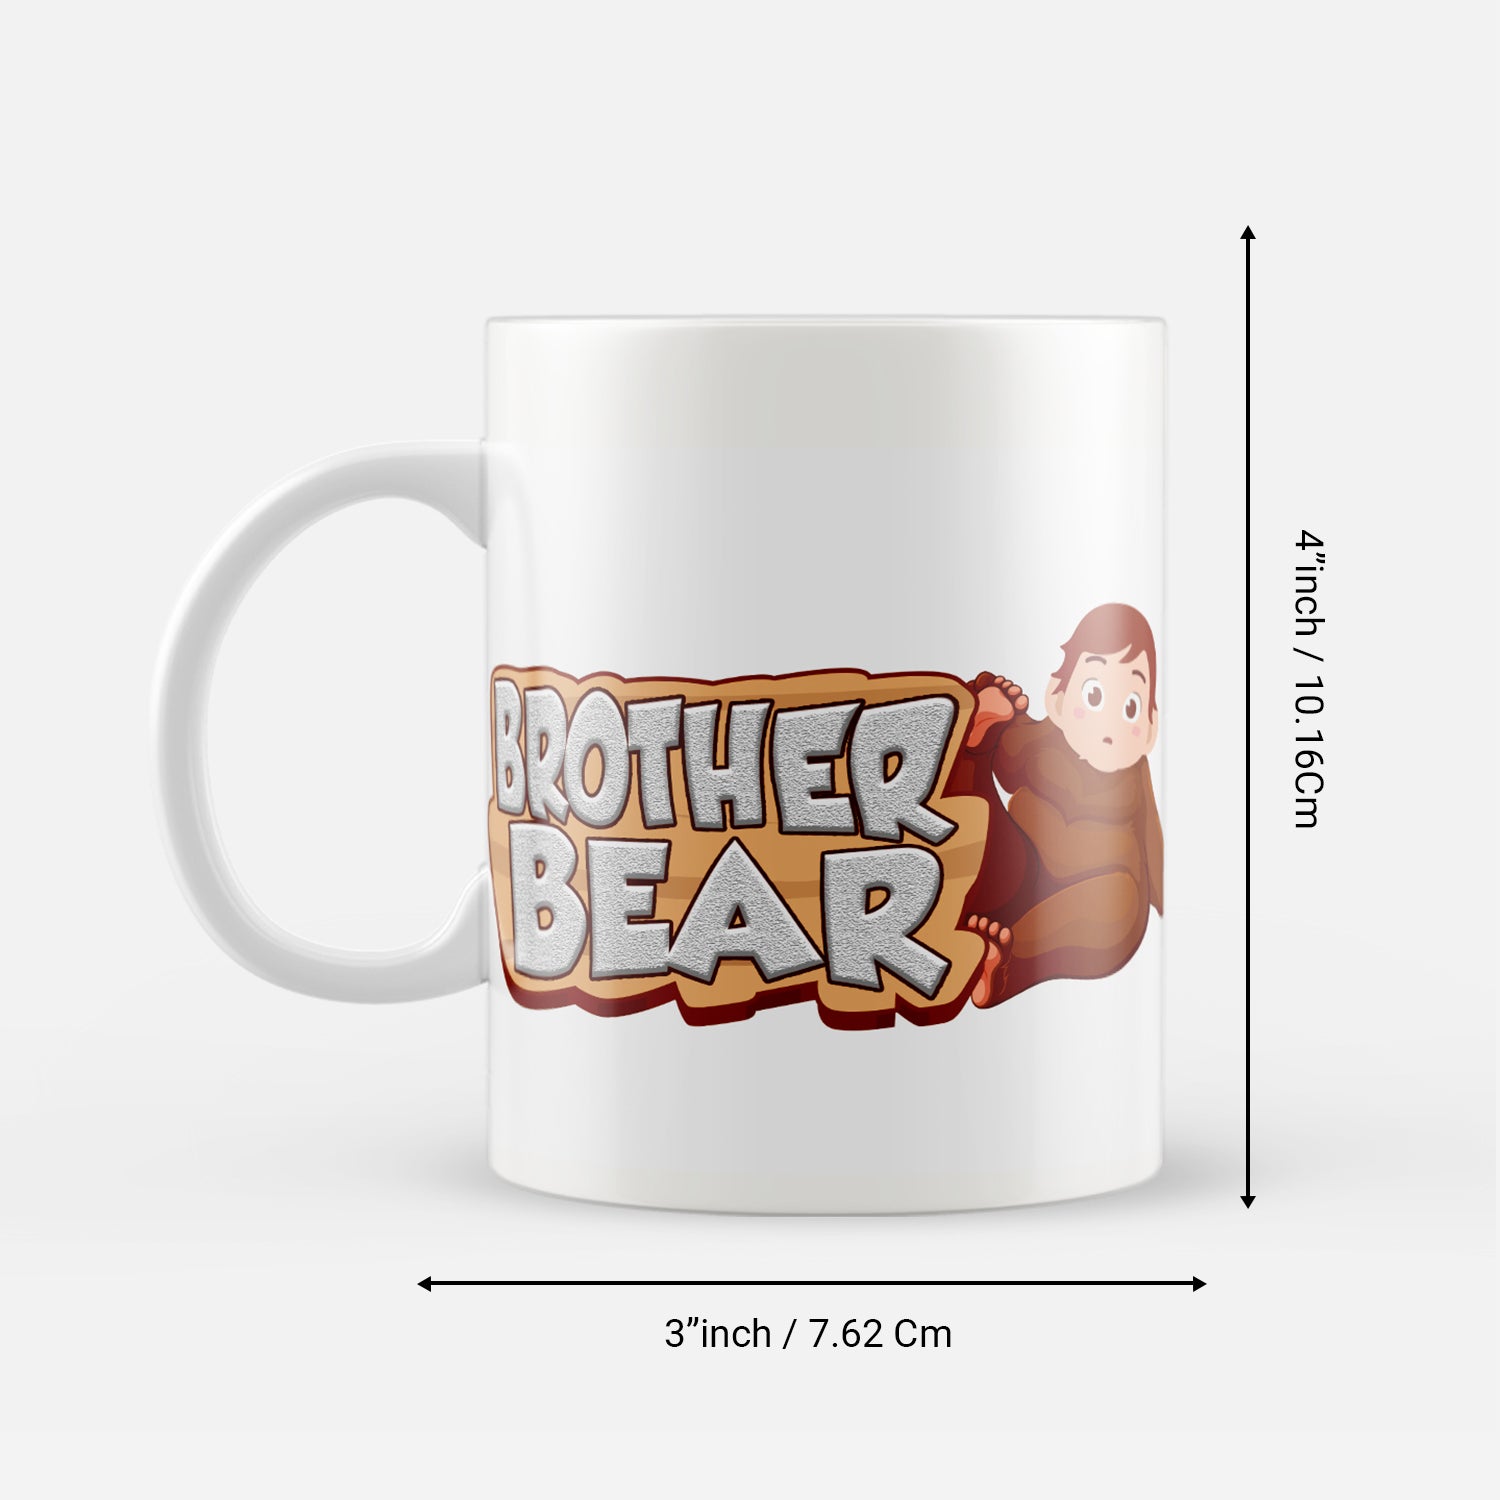 Brother Bear Ceramic Coffee/Tea Mug 3